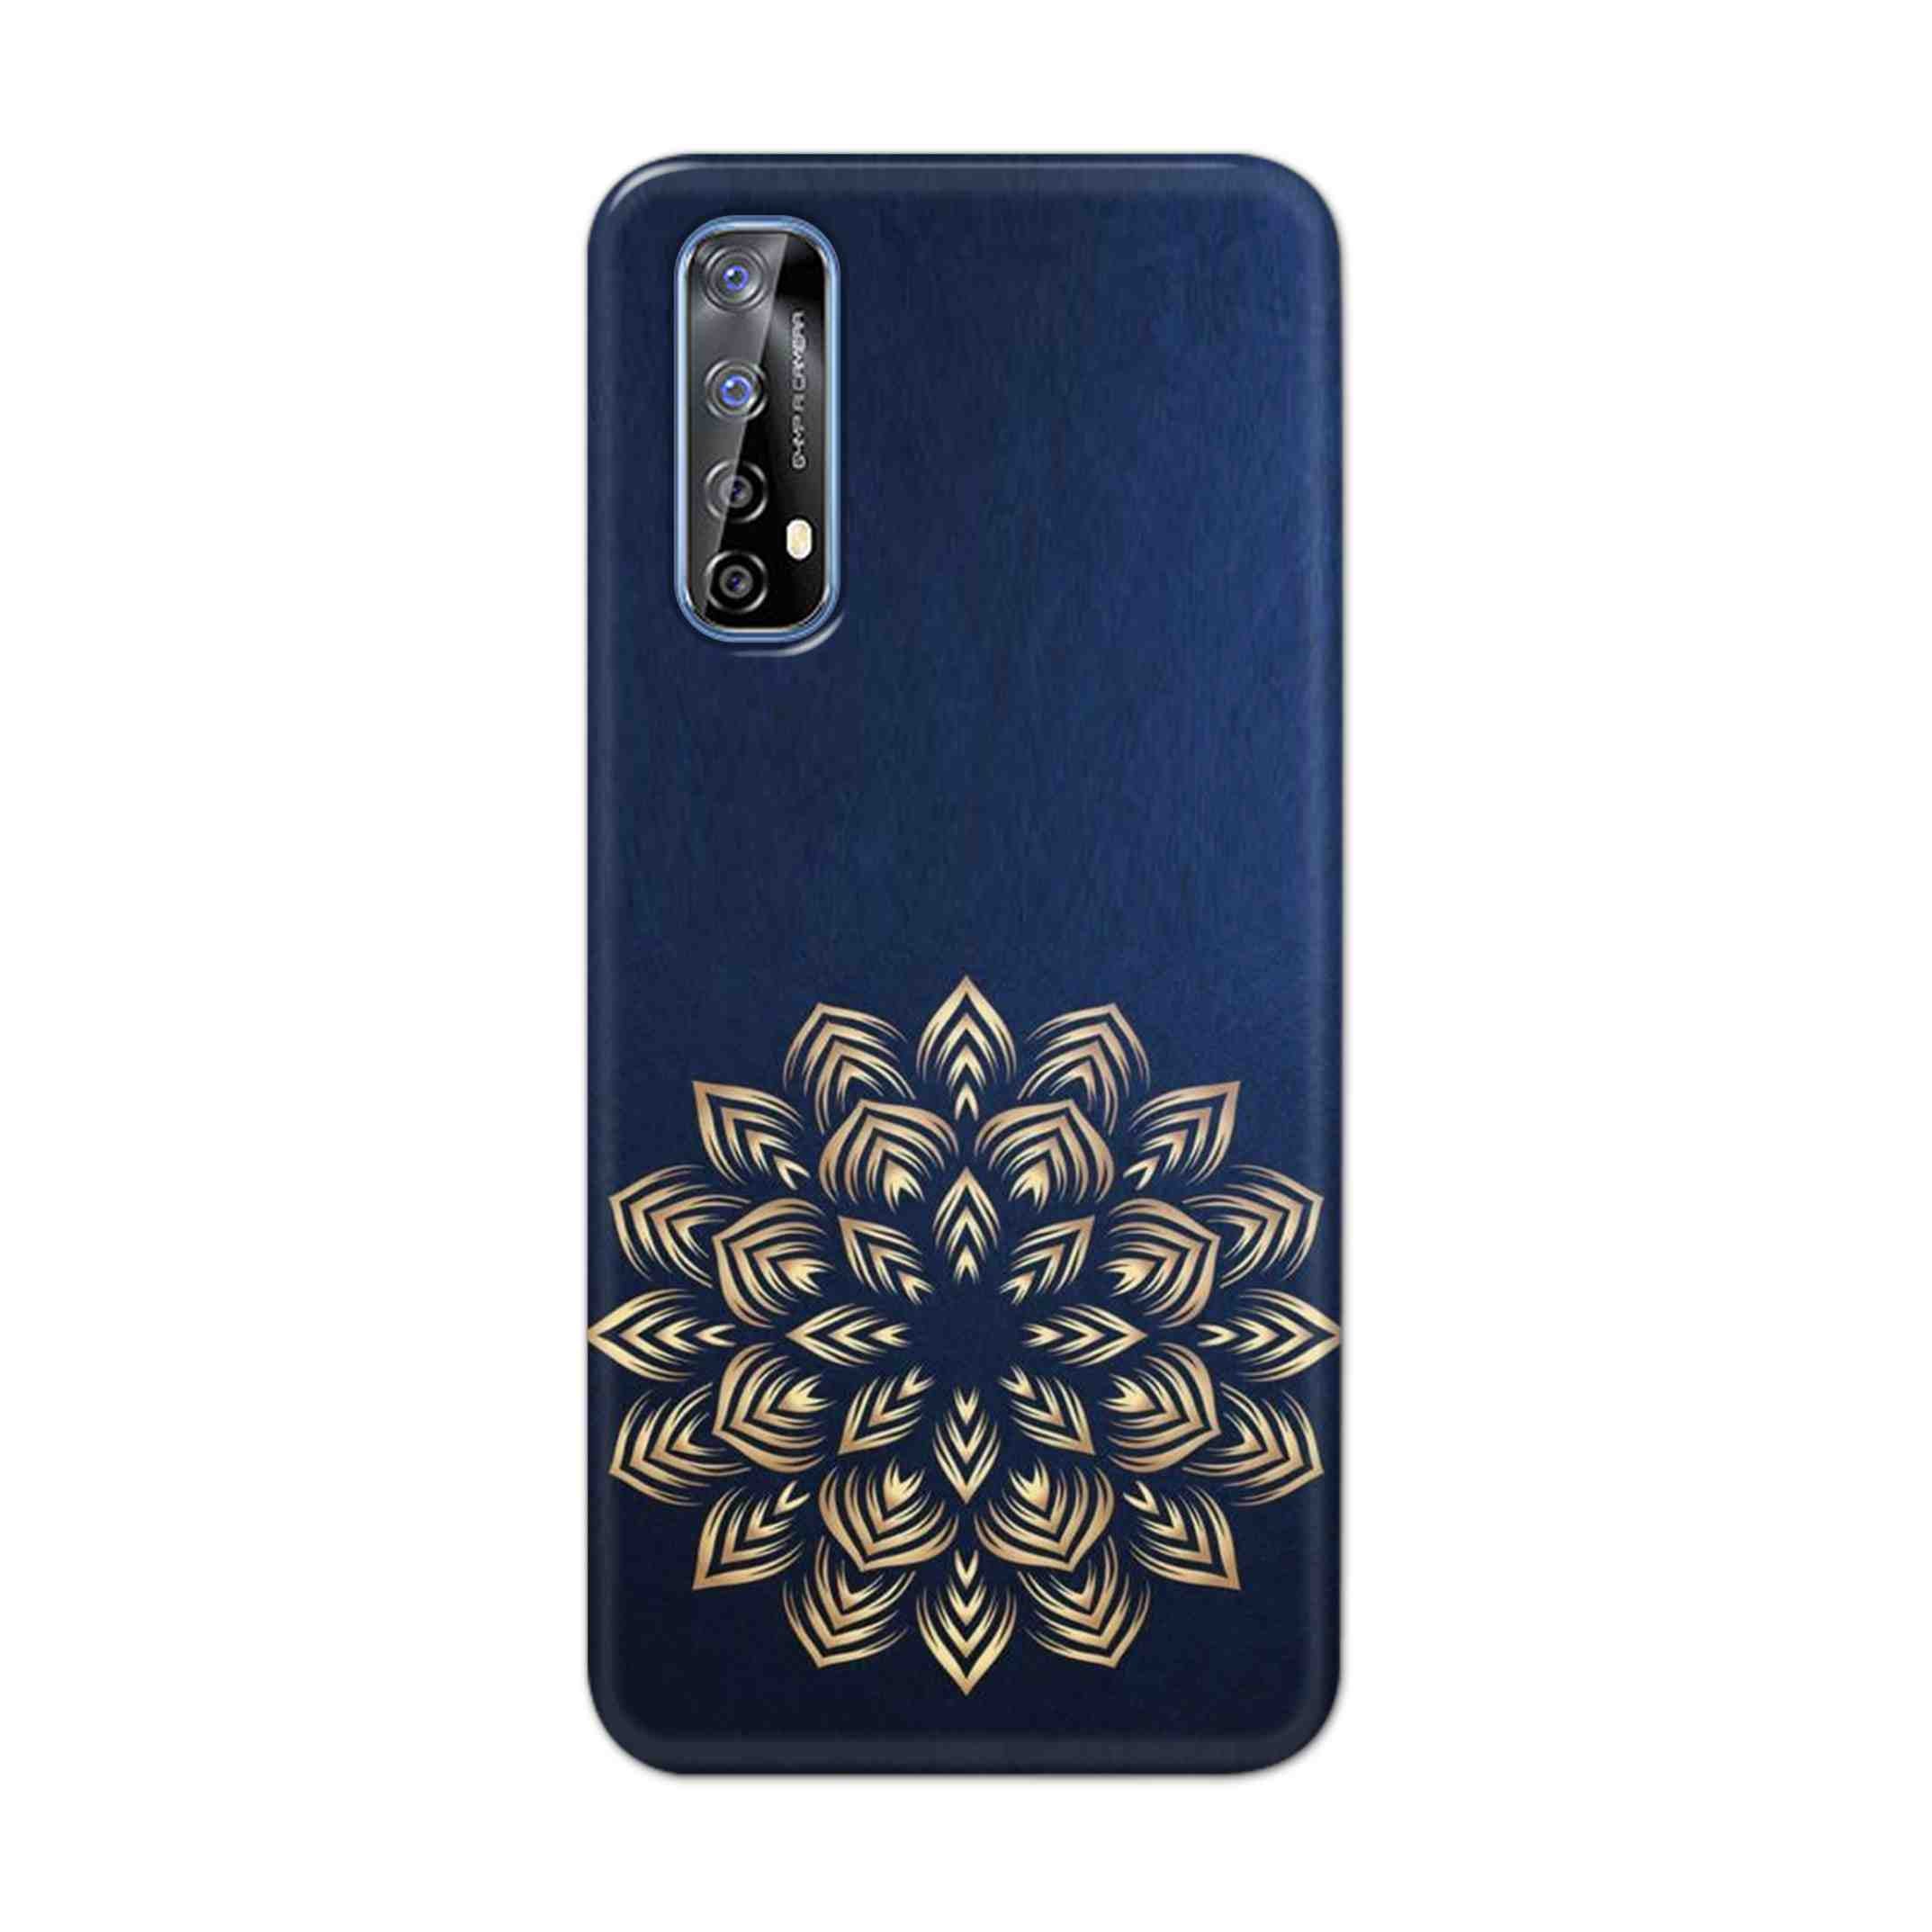 Buy Heart Mandala Hard Back Mobile Phone Case Cover For Realme 7 Online